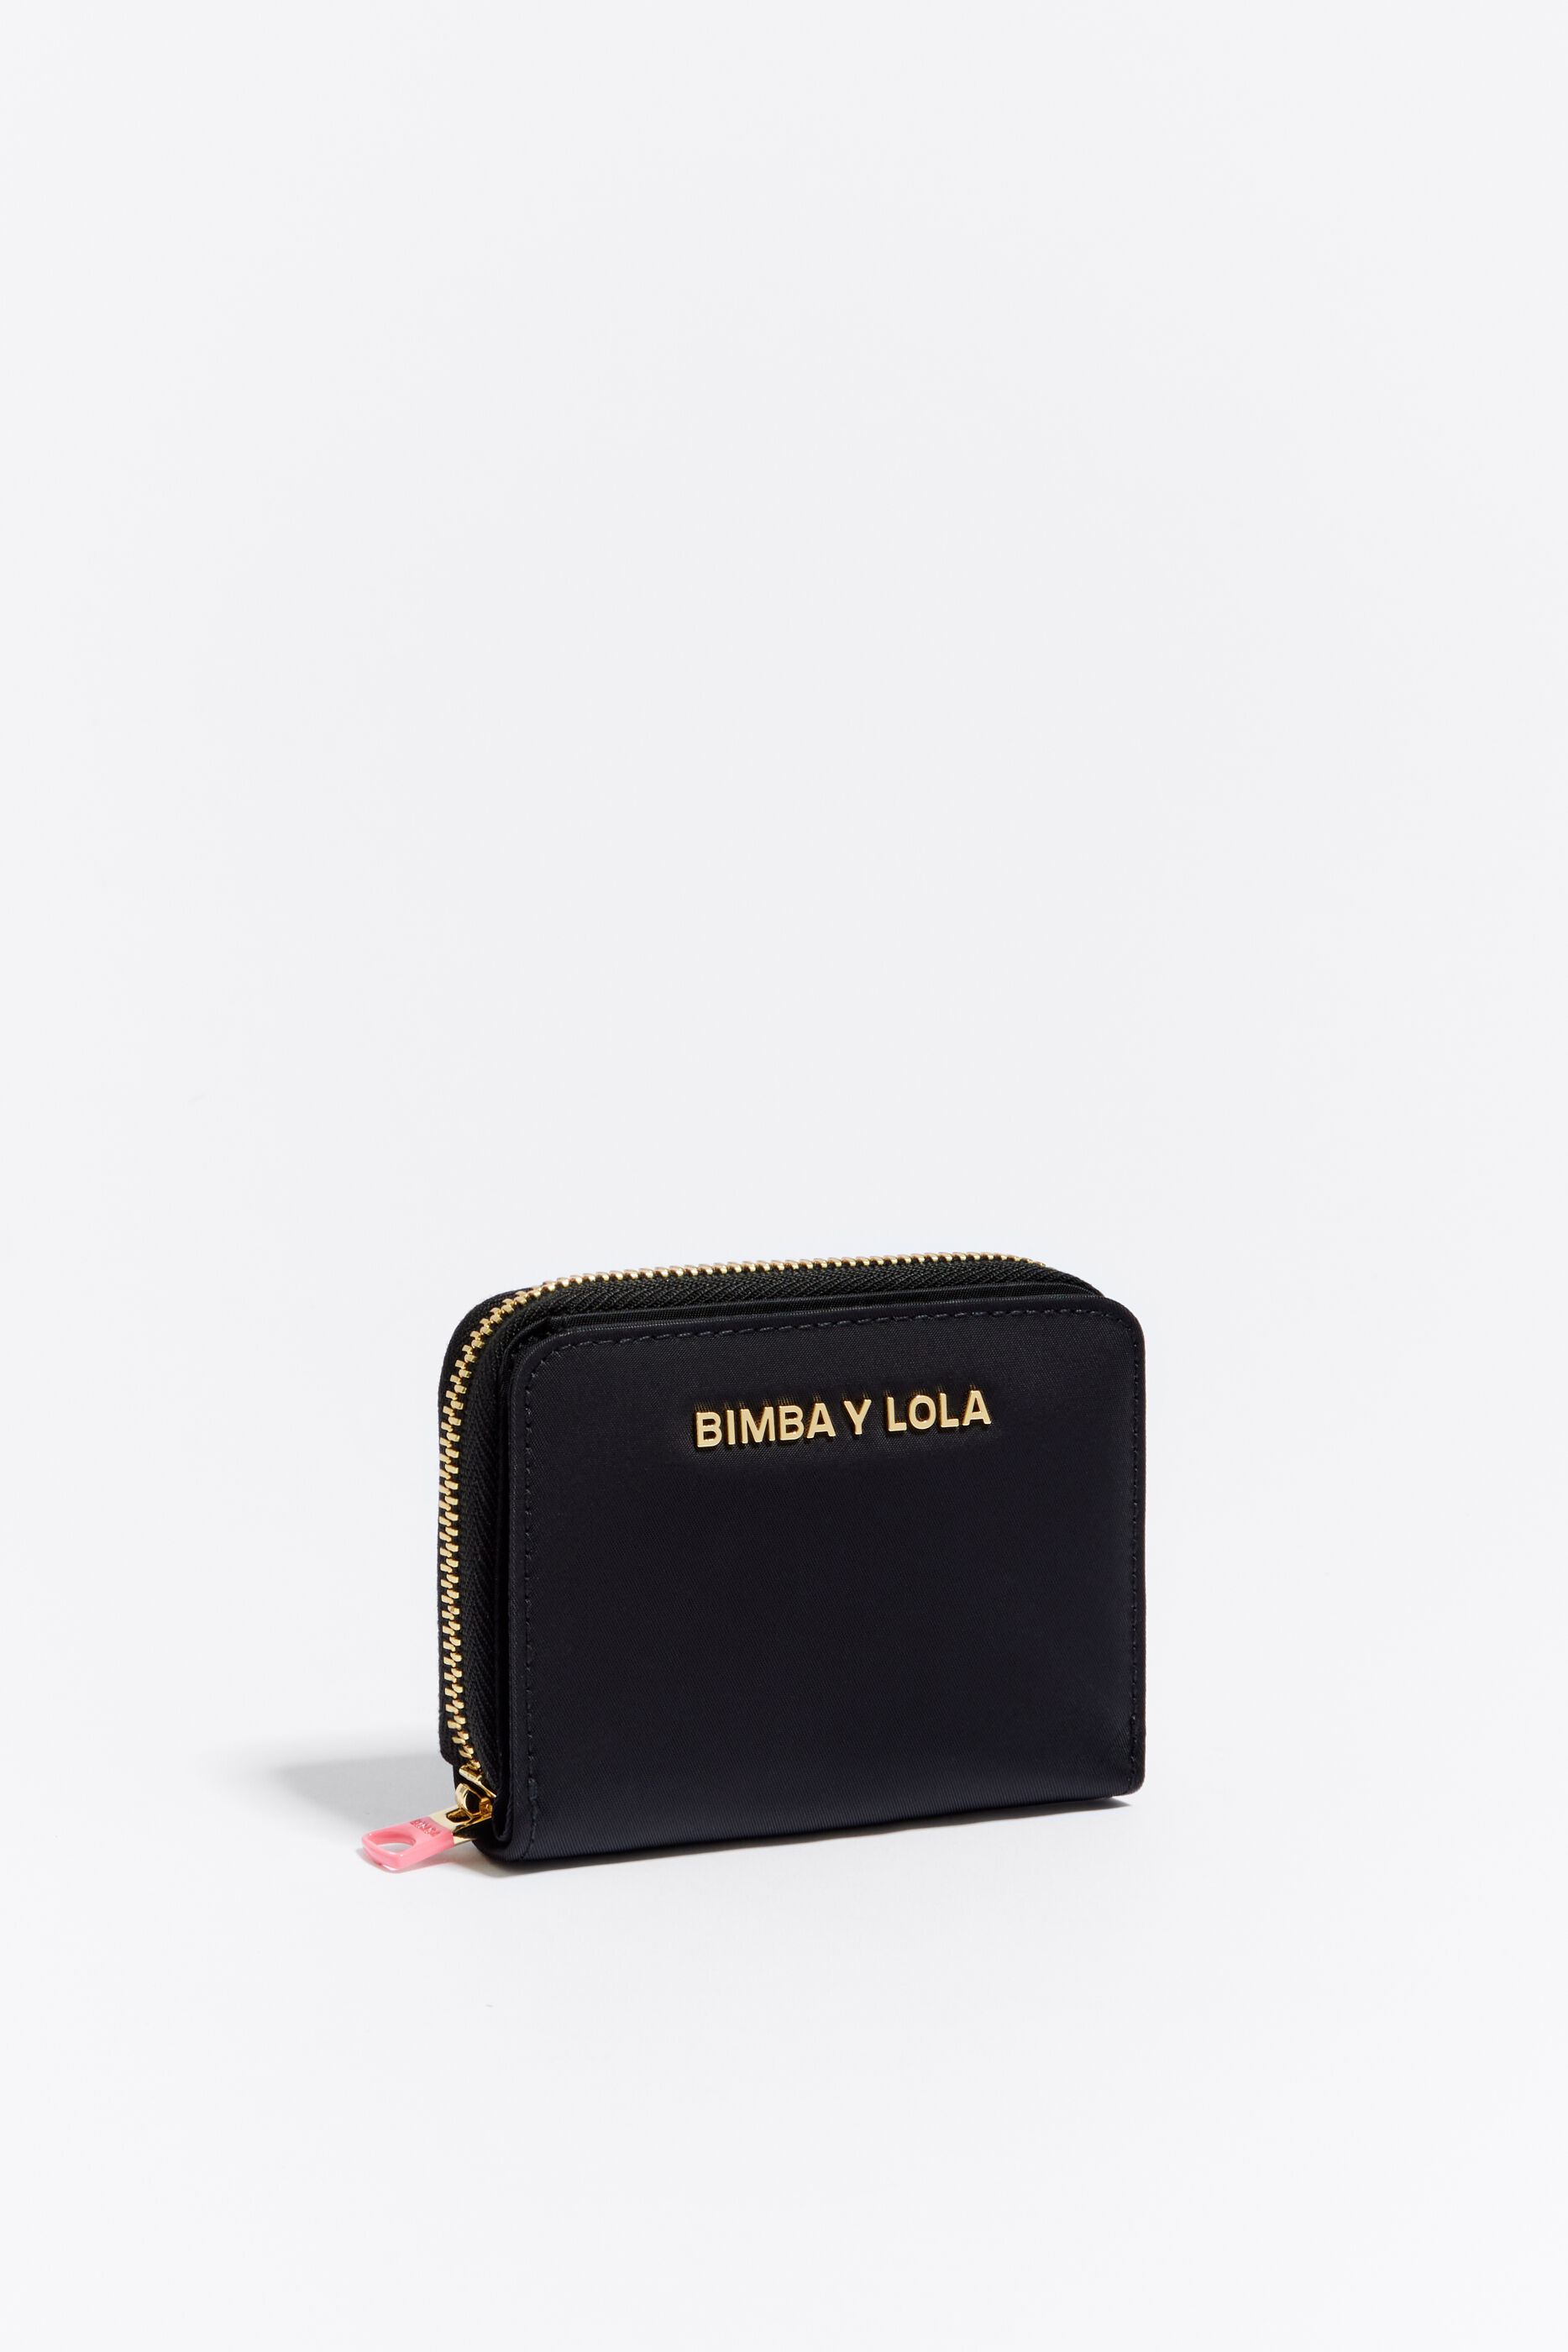 BIMBA Y LOLA Leather Bags & Handbags for Women for sale | eBay